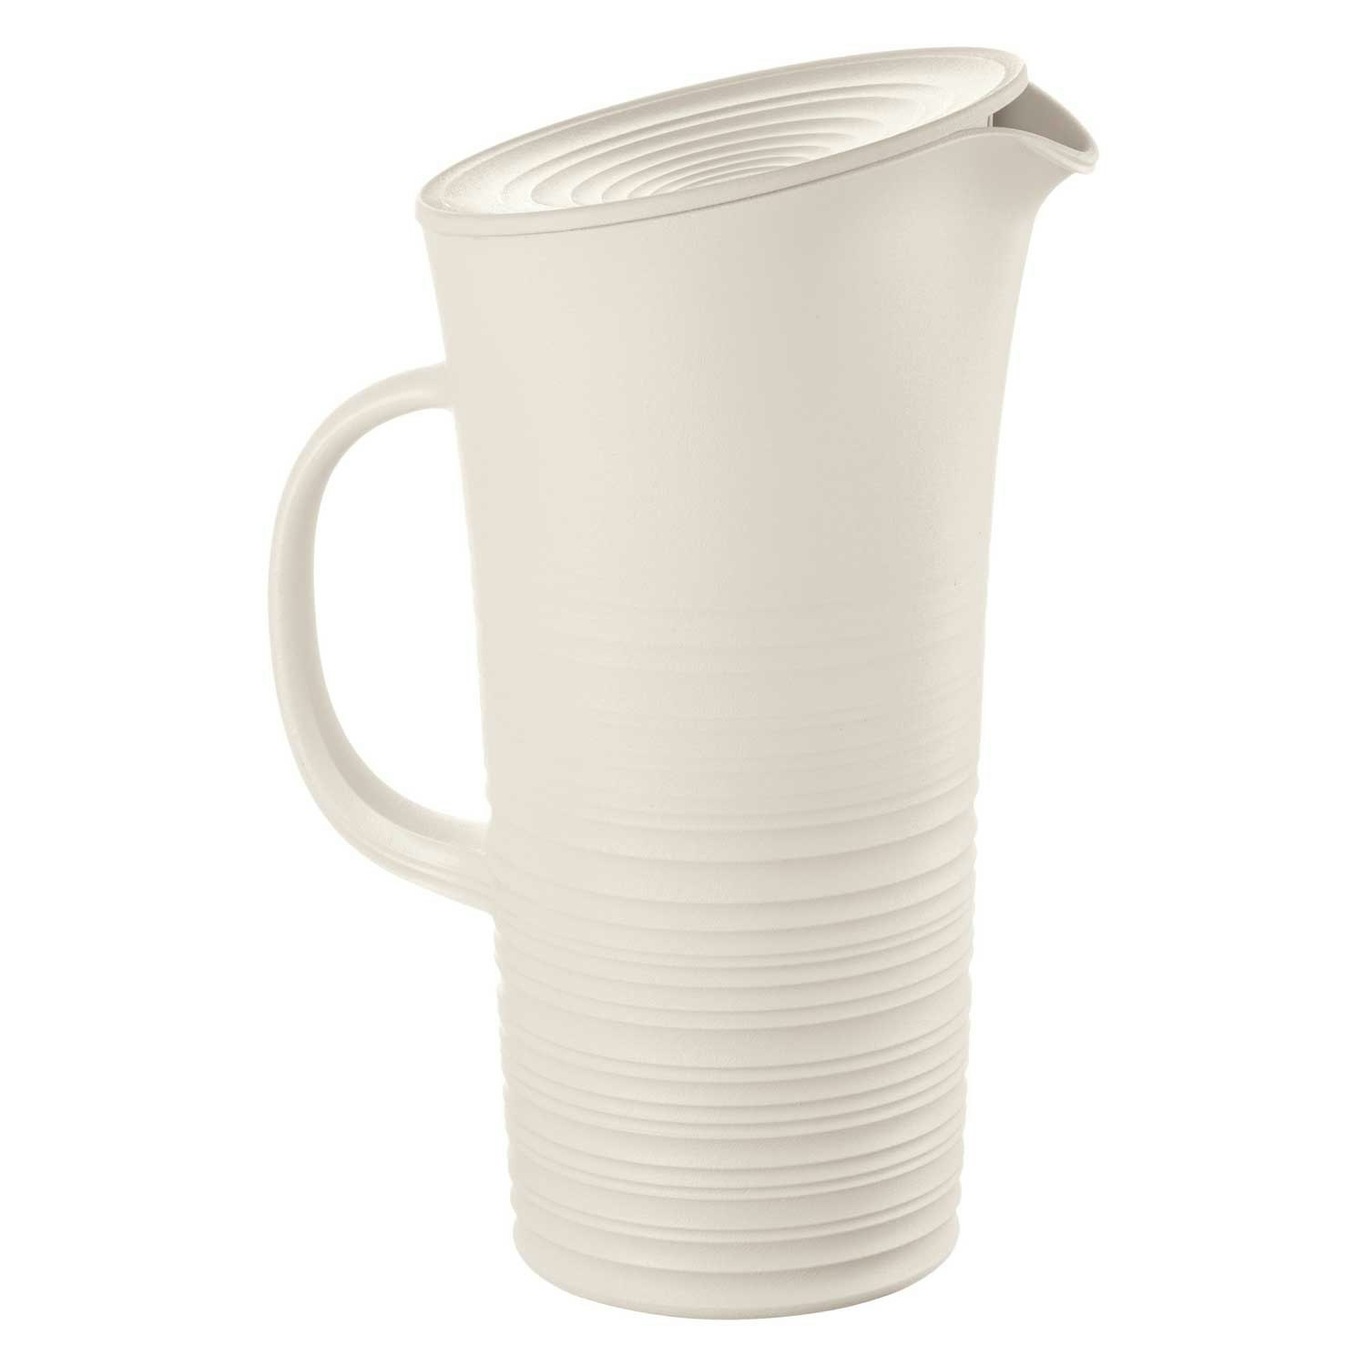 https://royaldesign.com/image/2/guzzini-tierra-pitcher-with-lid-1?w=800&quality=80